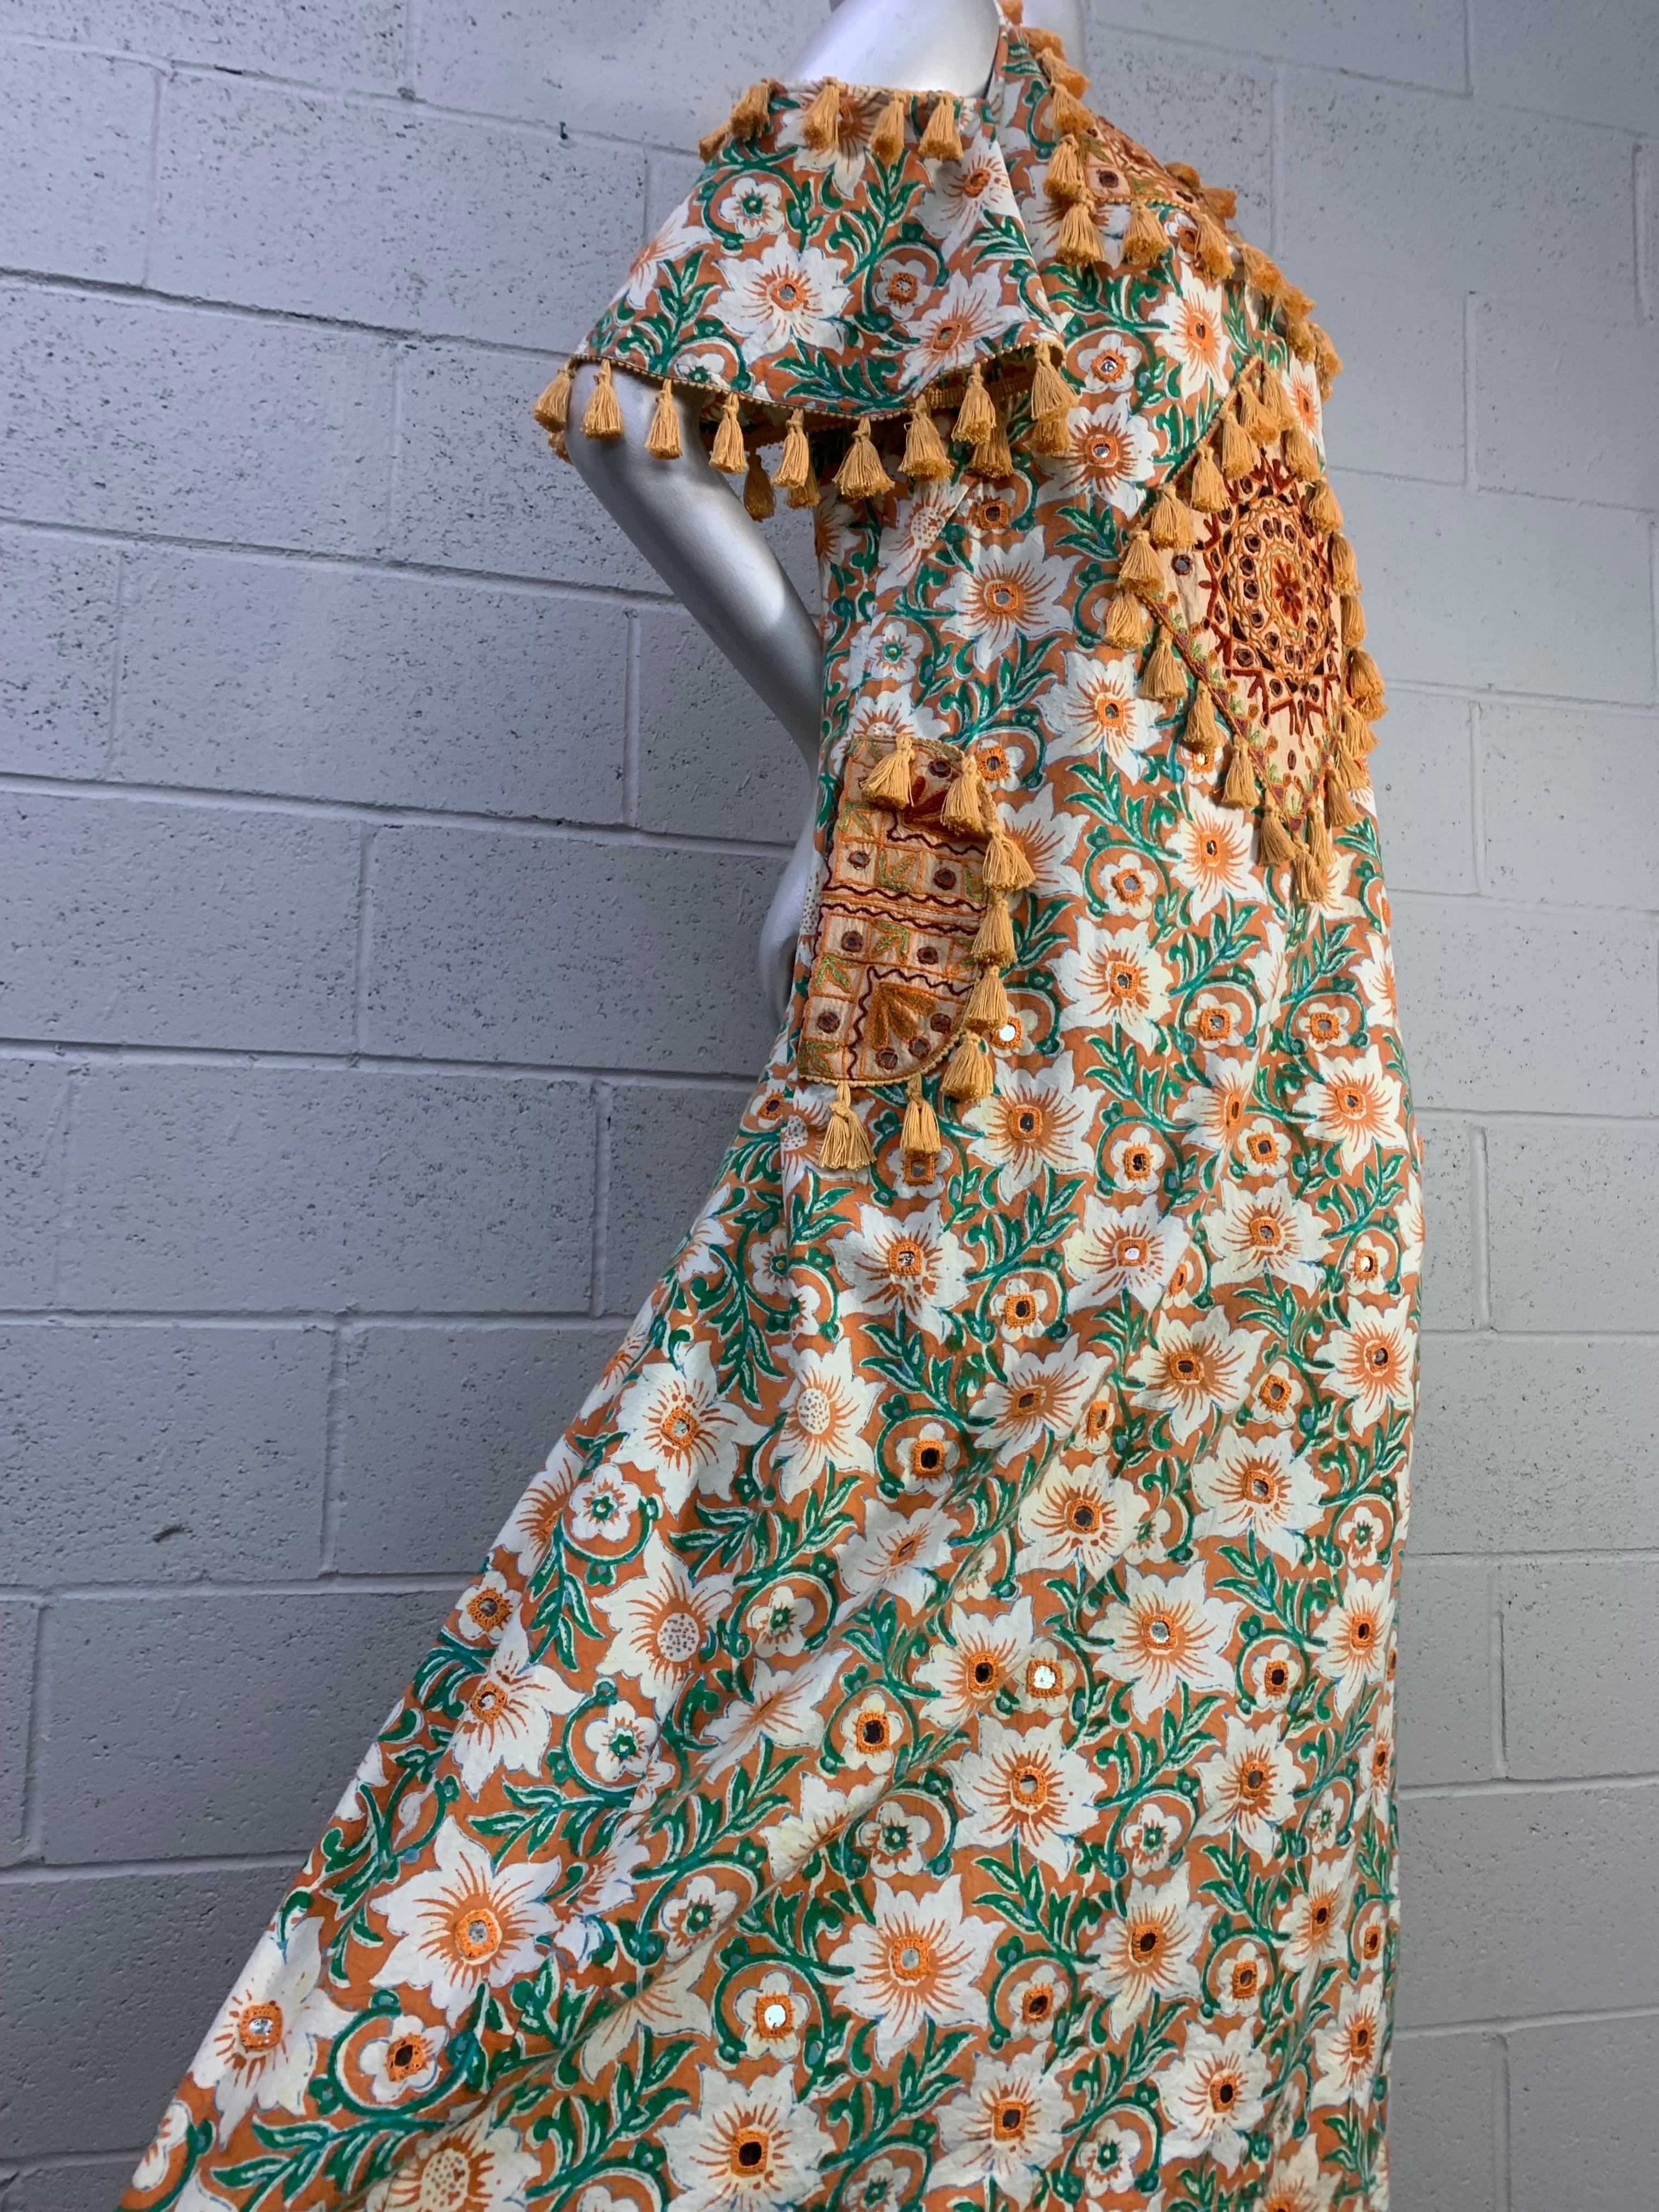 Torso Creations Cotton Lily Print Resort Dress w Mirror Tile and Tassel Fringe 8